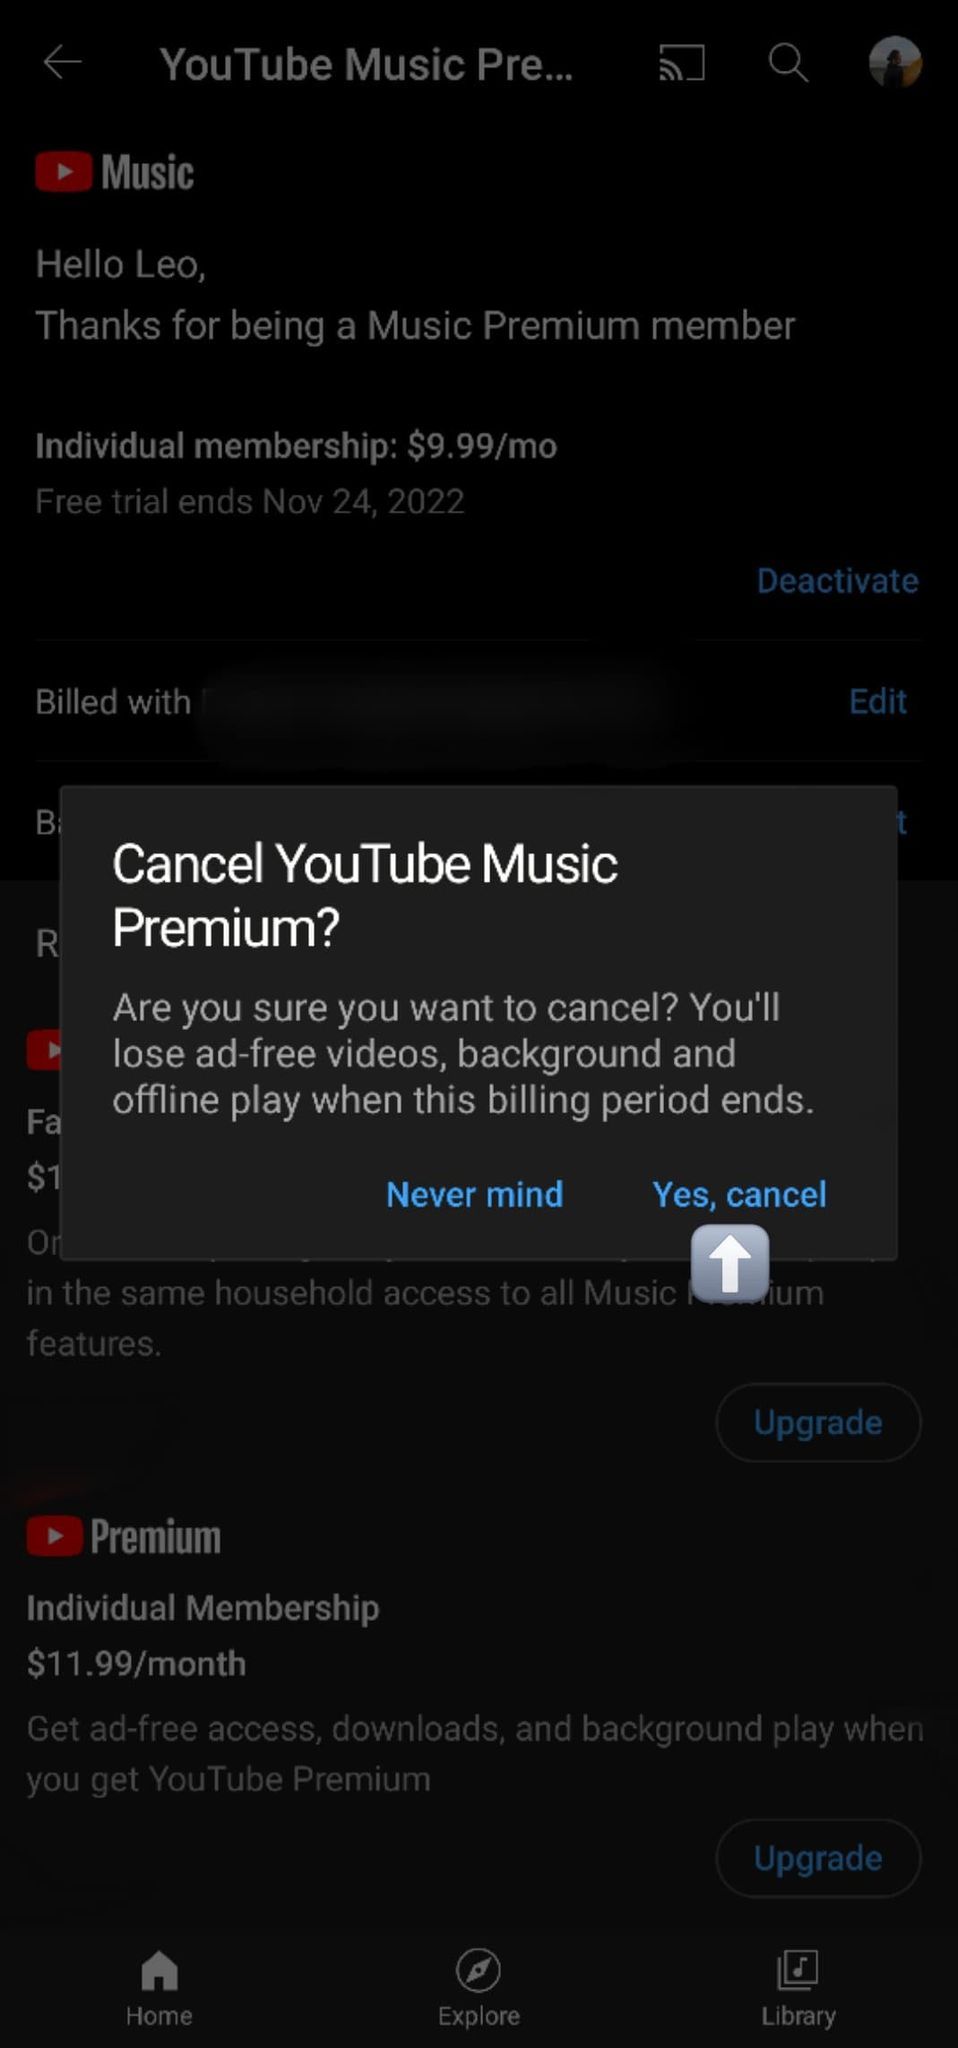 Tangkapan layar menampilkan pop-up pembatalan terakhir yang menanyakan 'Batalkan YouTube Music Premium?'.  Panah menunjuk ke Ya, batalkan di kanan bawah pop-up.